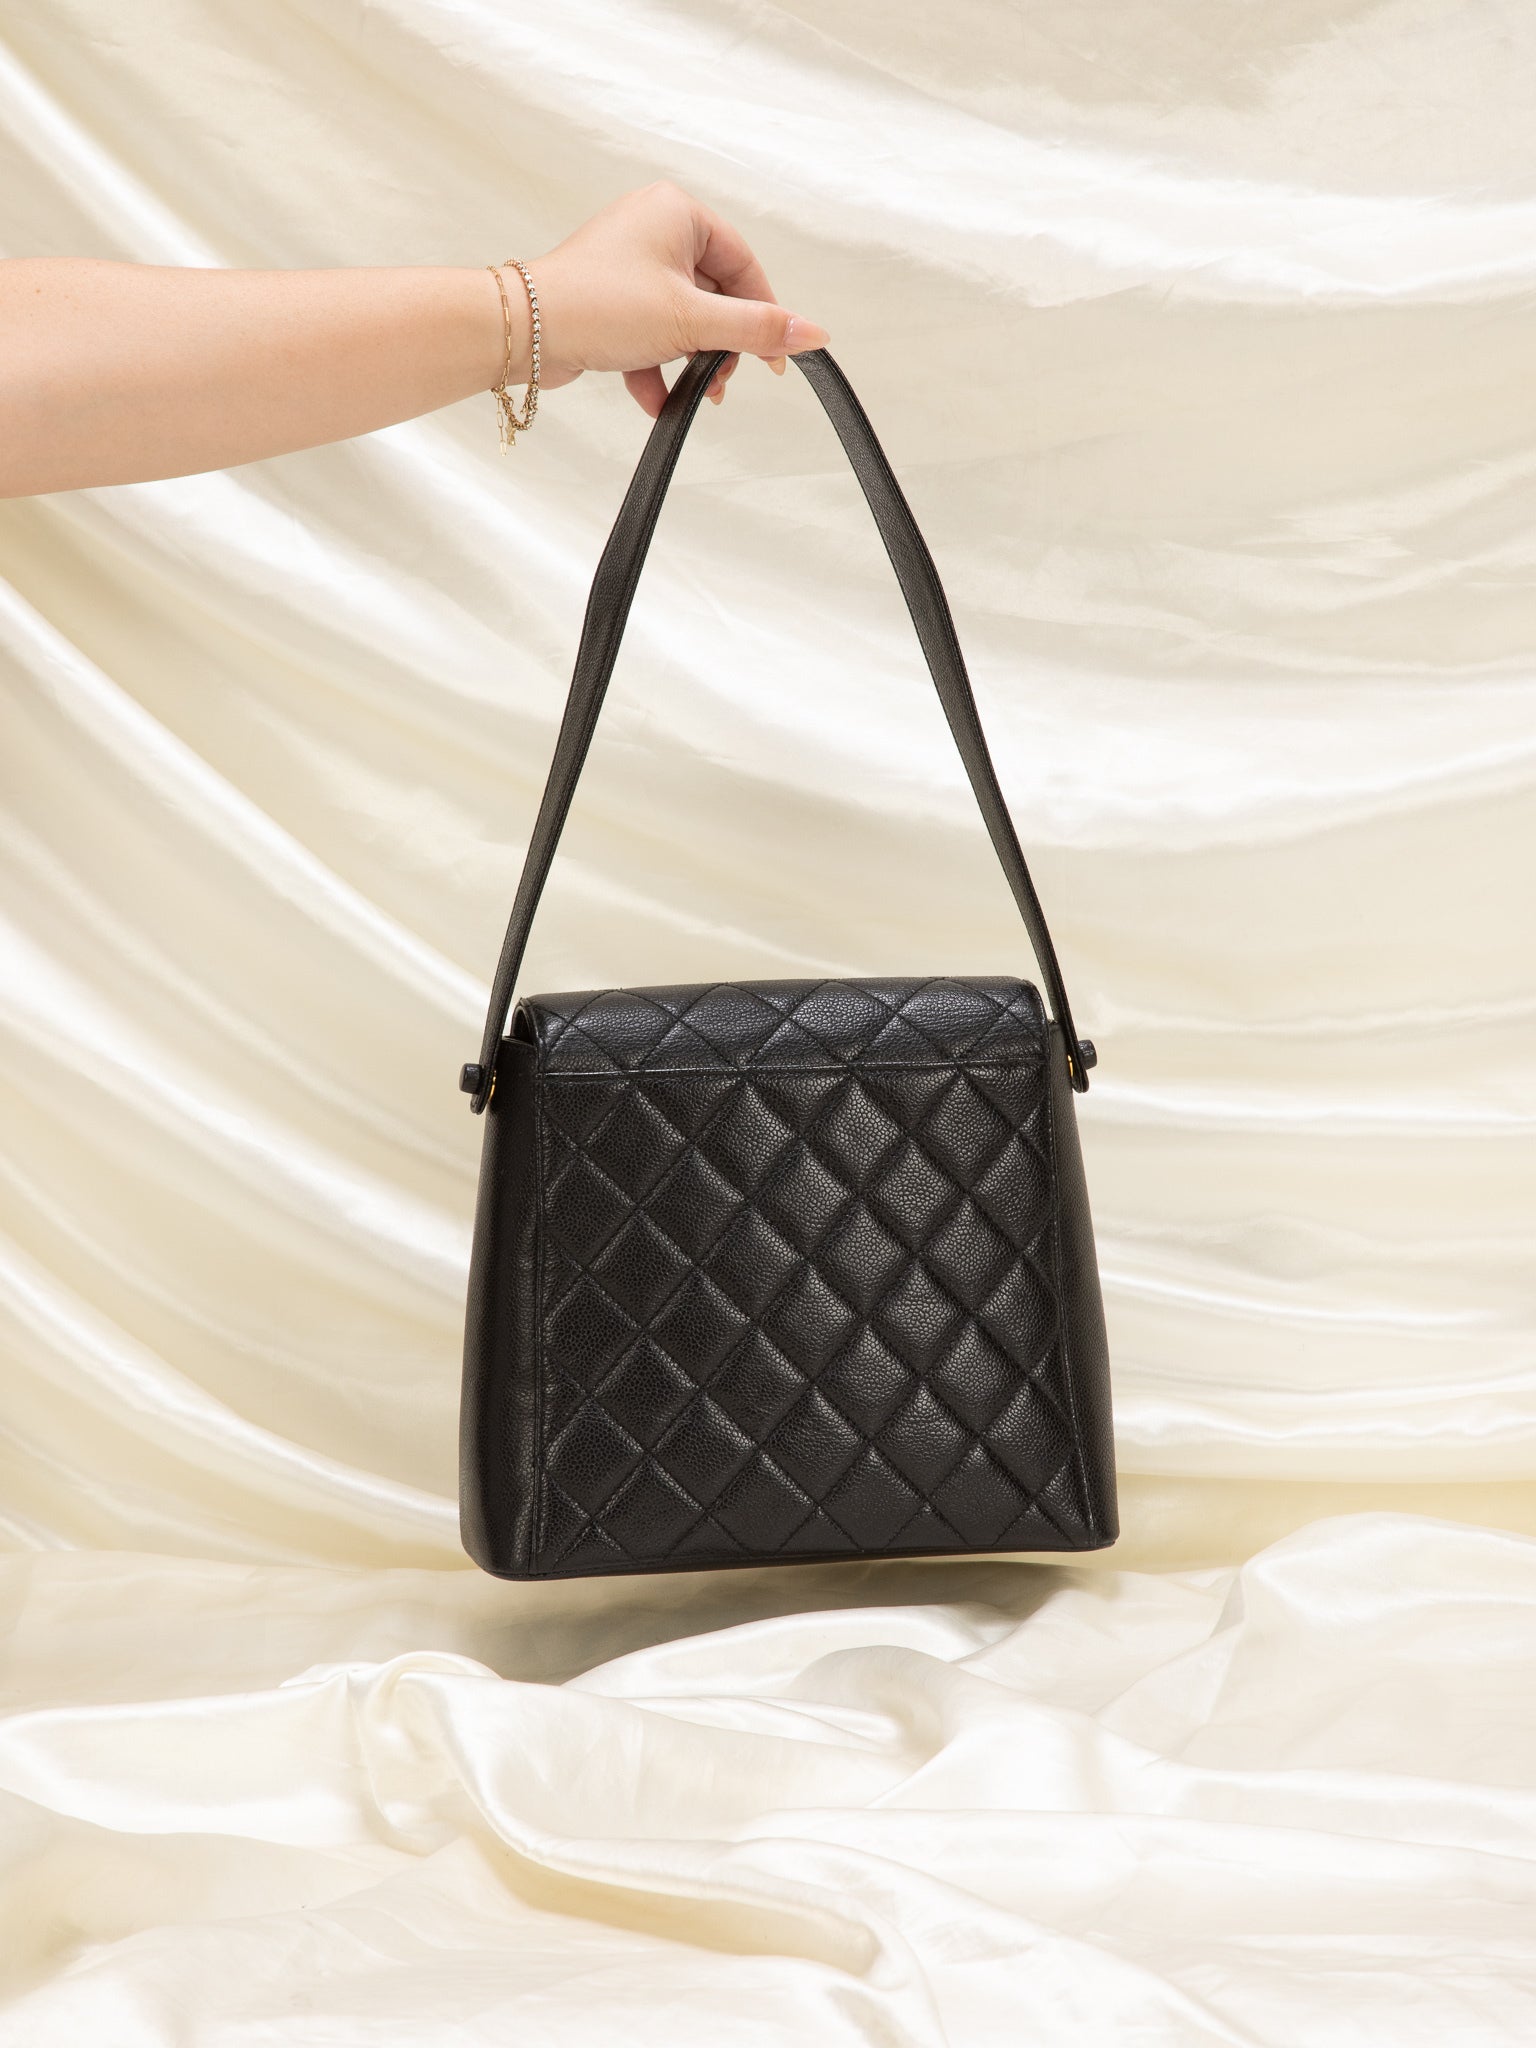 CHANEL Caviar Turn Lock Bags & Handbags for Women, Authenticity Guaranteed